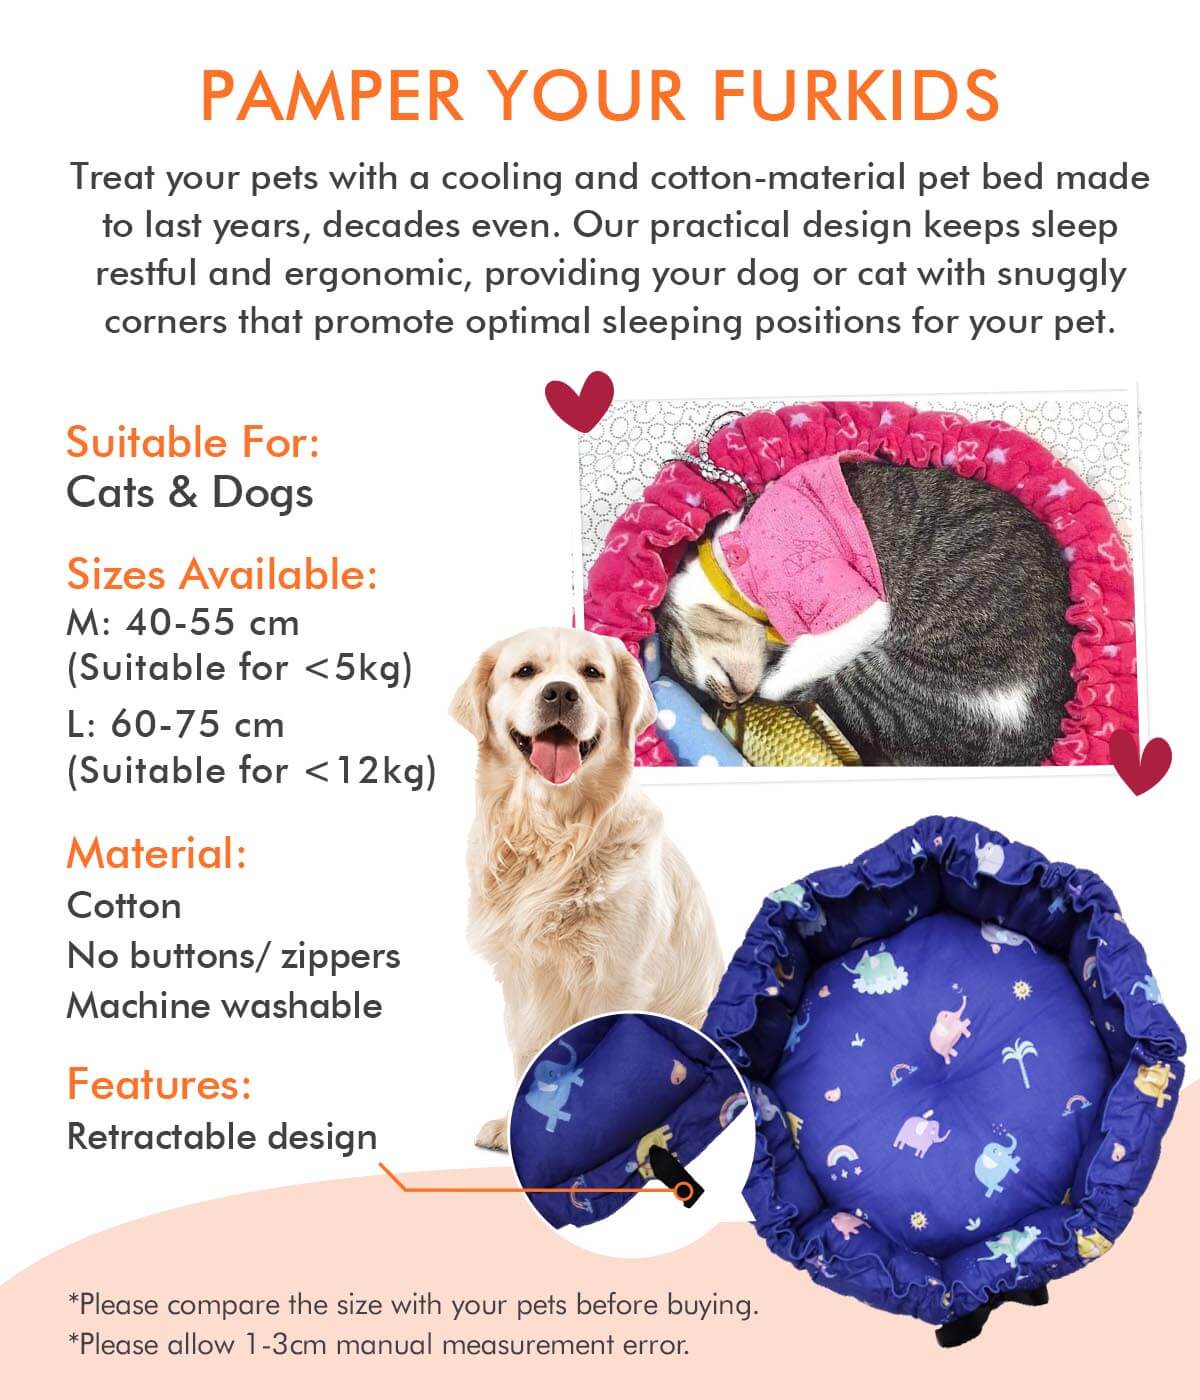 PettoGard Surface Disinfectant and Deodorizer Spray + Pumpkin Pet Bed Bundle